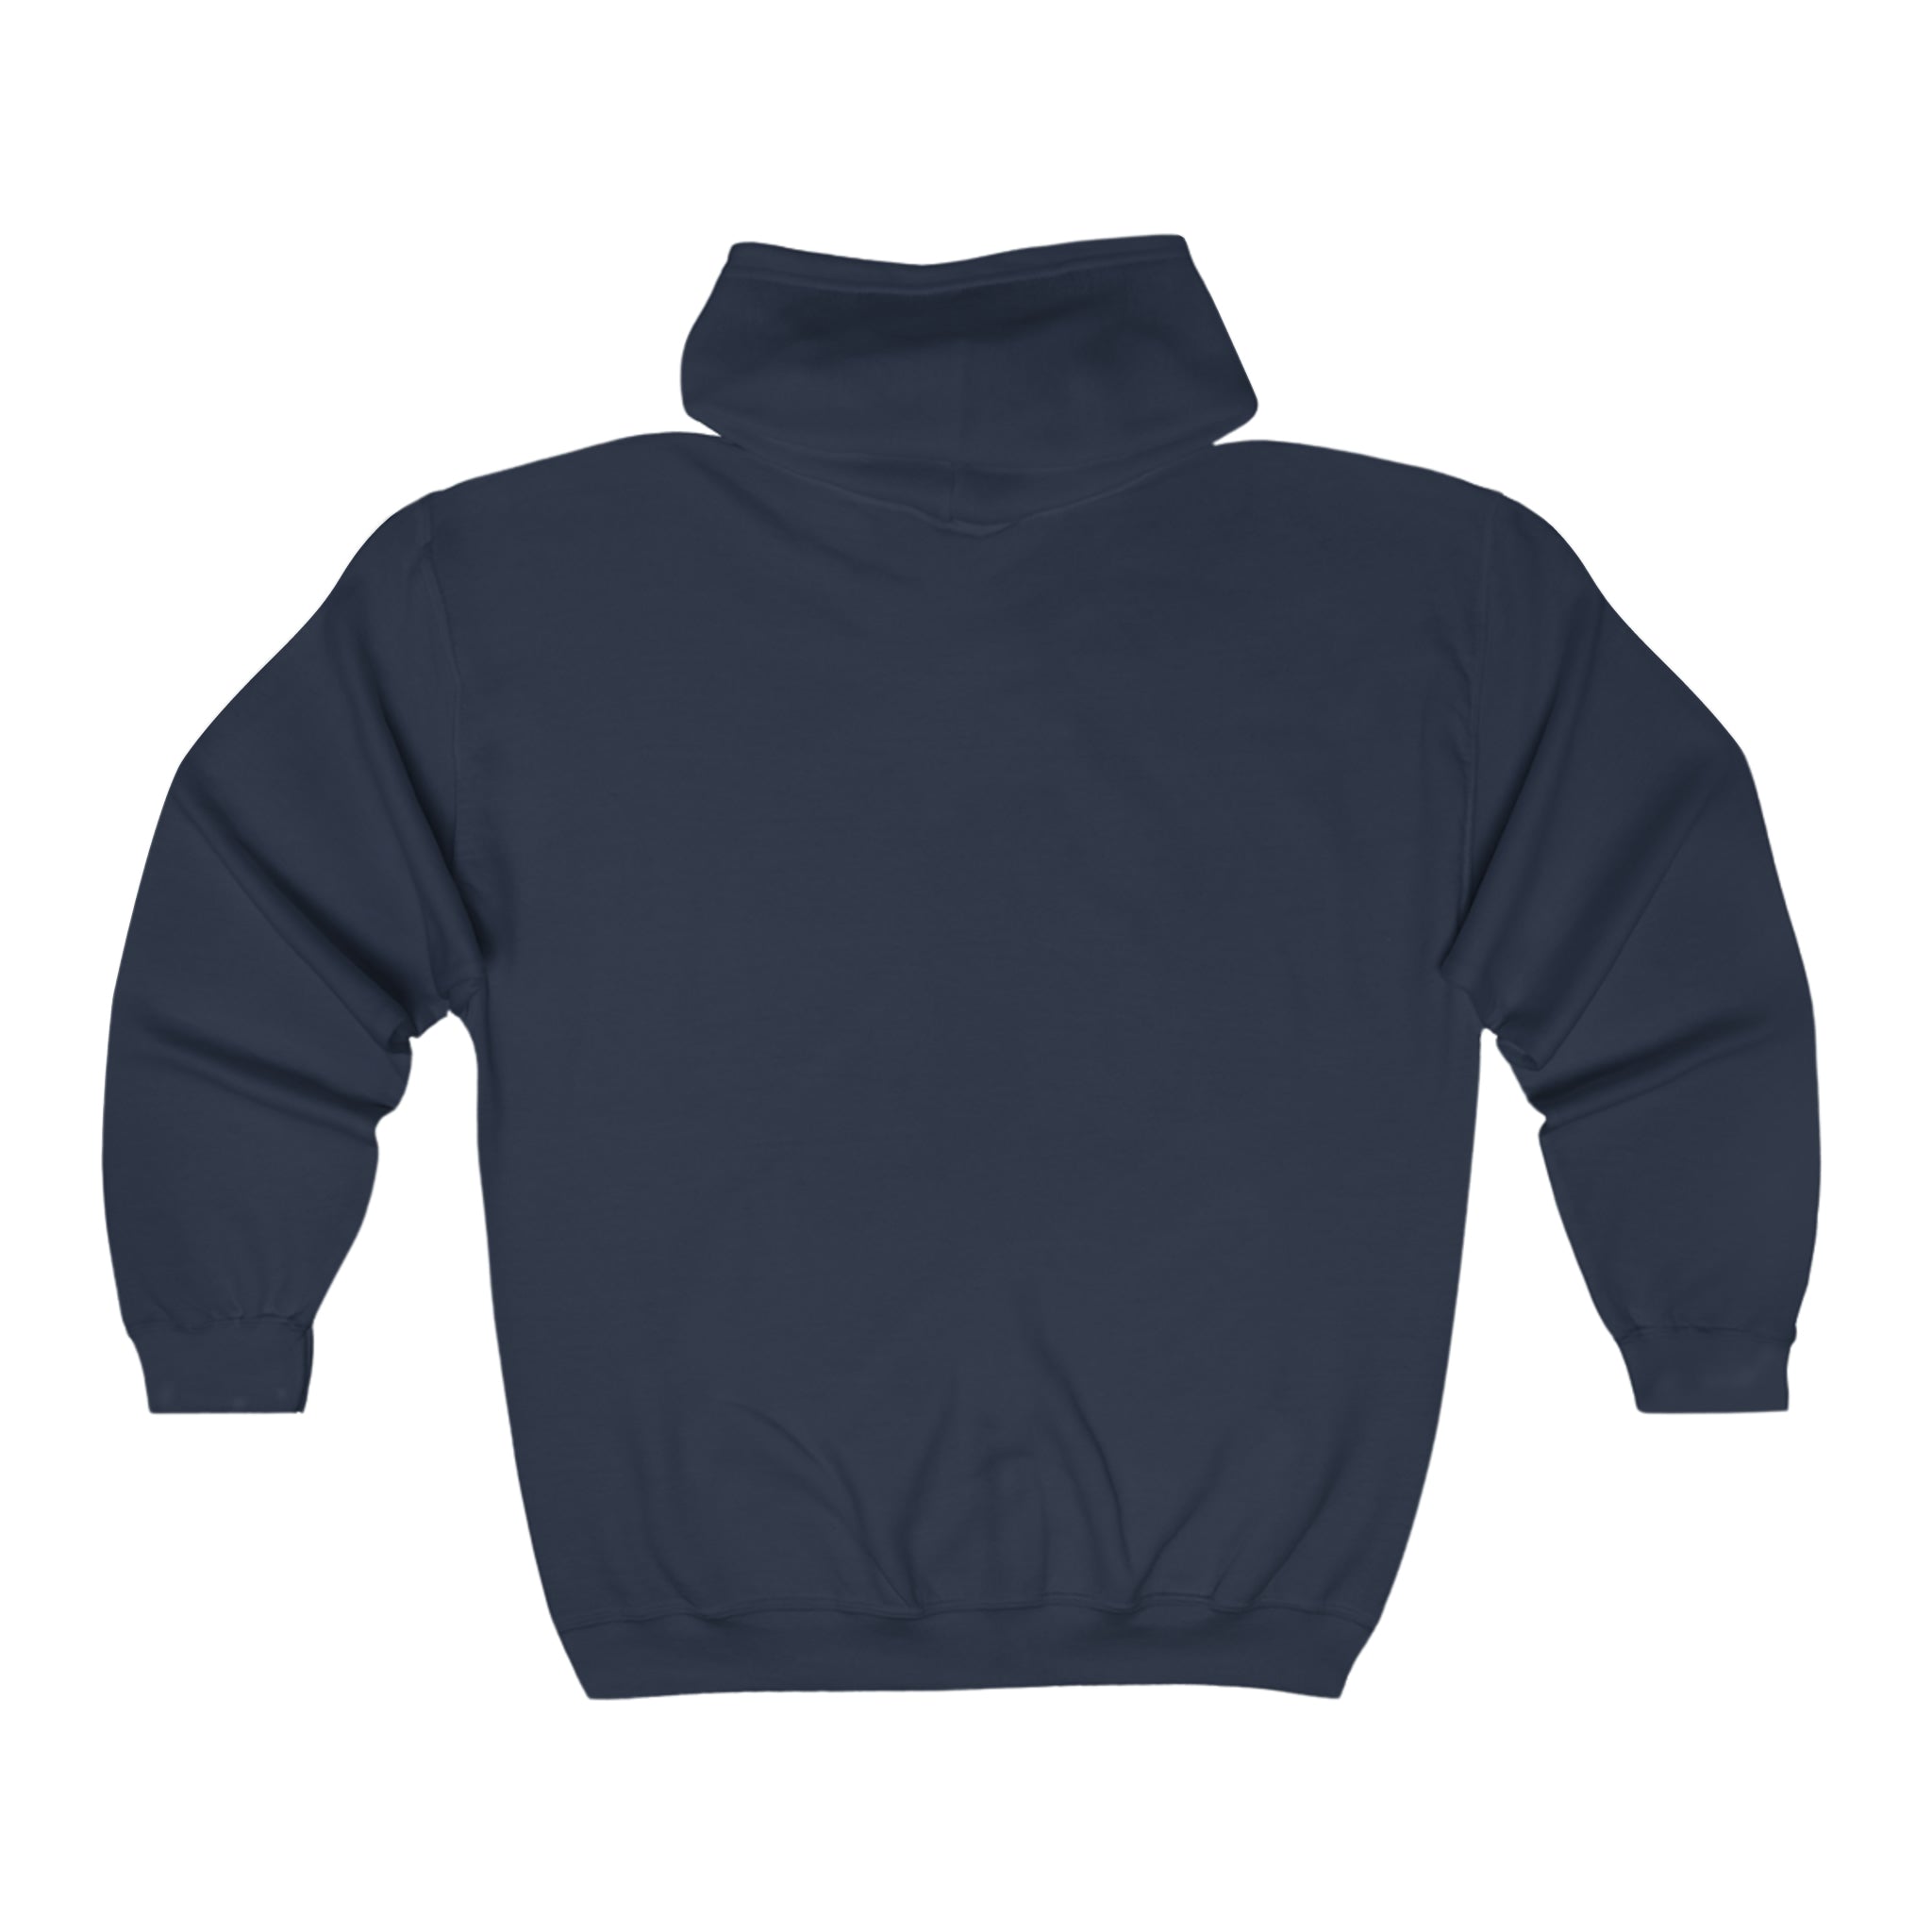 Unisex Heavy Blend™ Full Zip Hooded Sweatshirt - Baby Animals - Chimpanzee